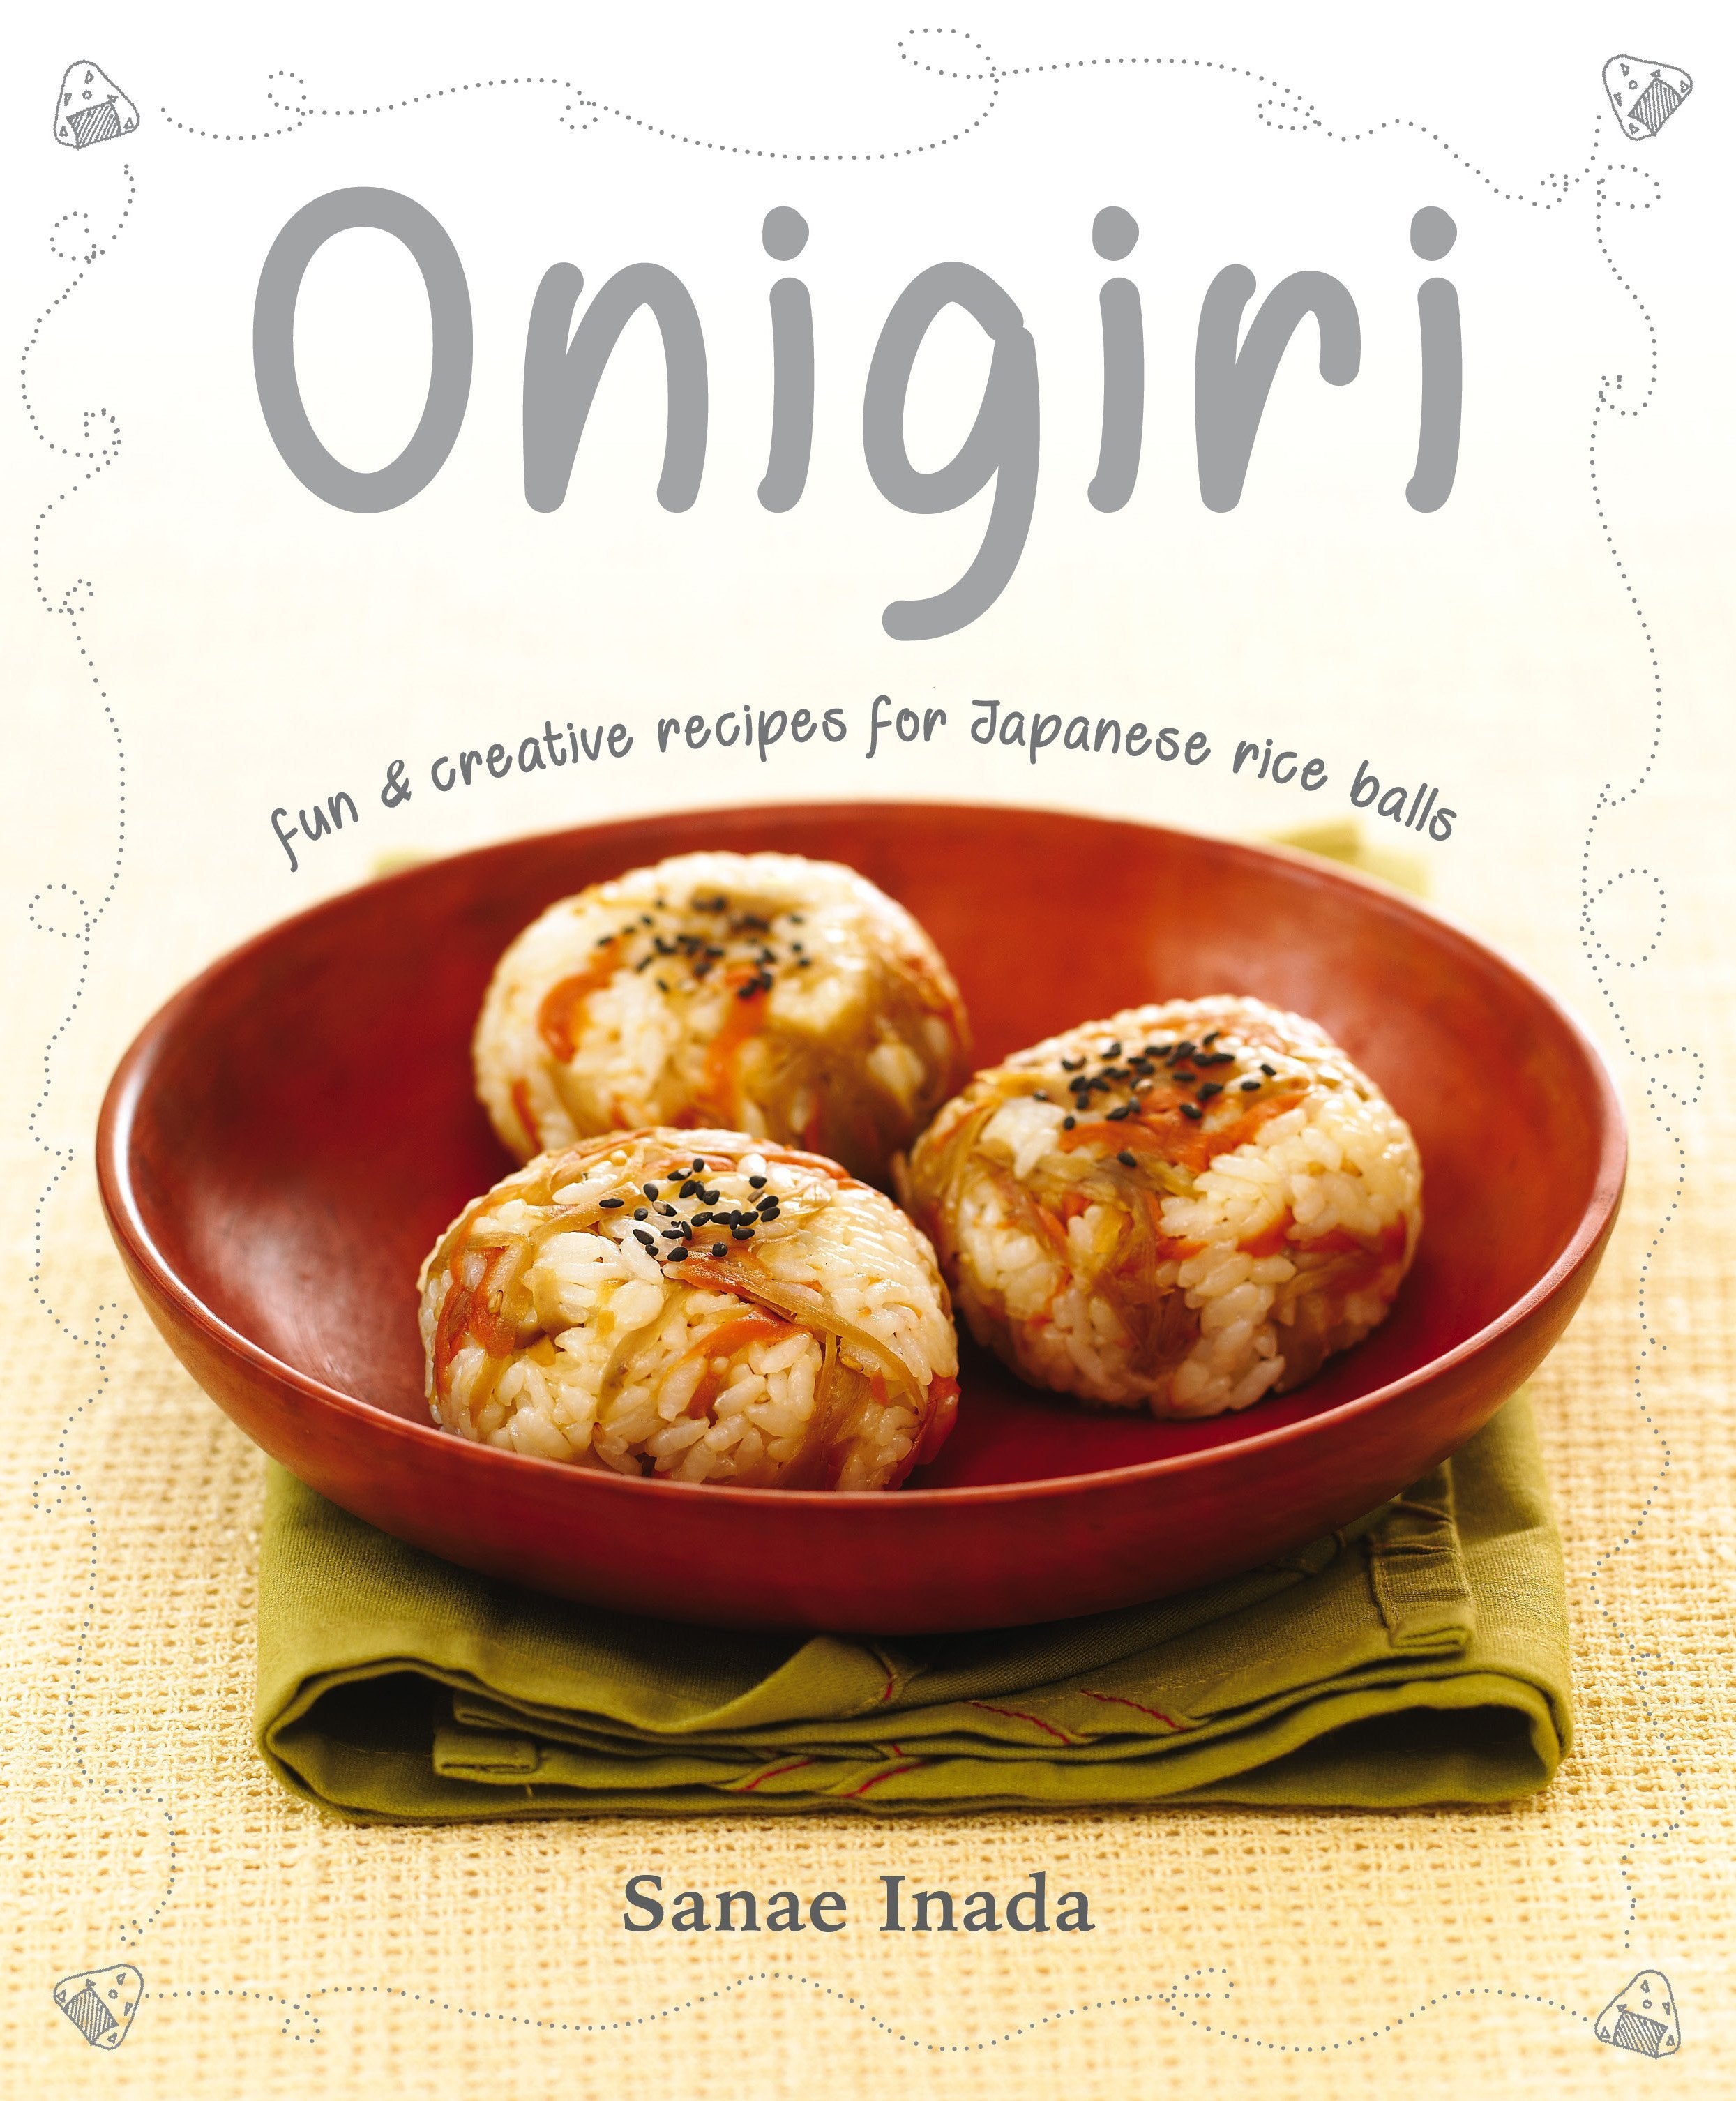 Onigiri: Fun & creative recipes for Japanese rice balls